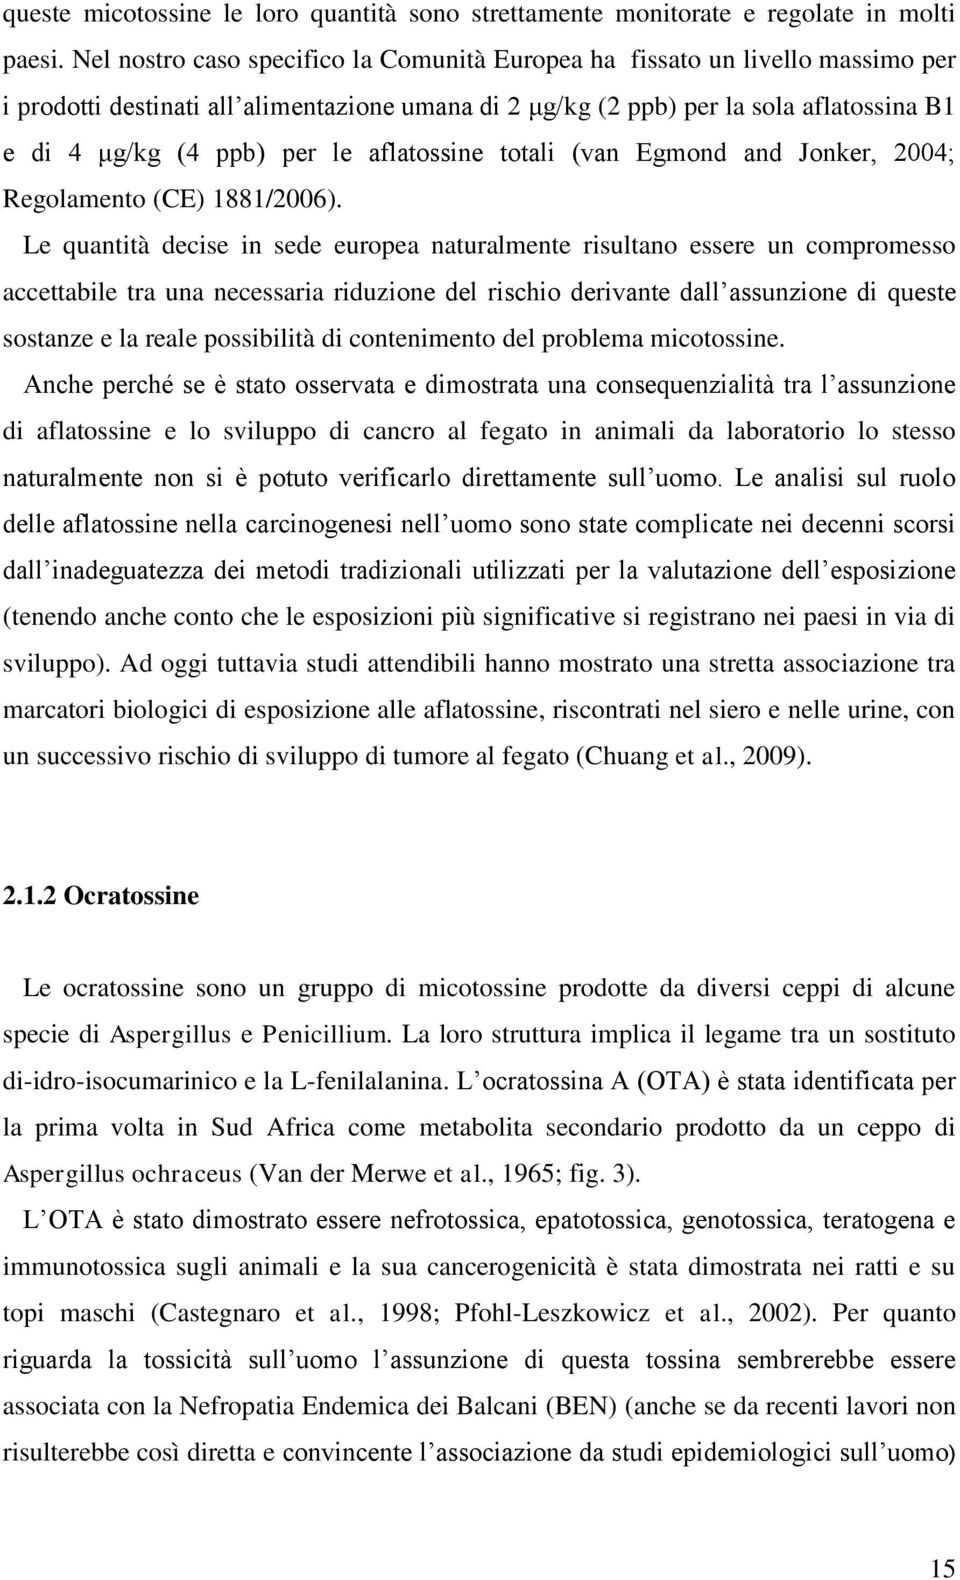 aflatossine totali (van Egmond and Jonker, 2004; Regolamento (CE) 1881/2006).